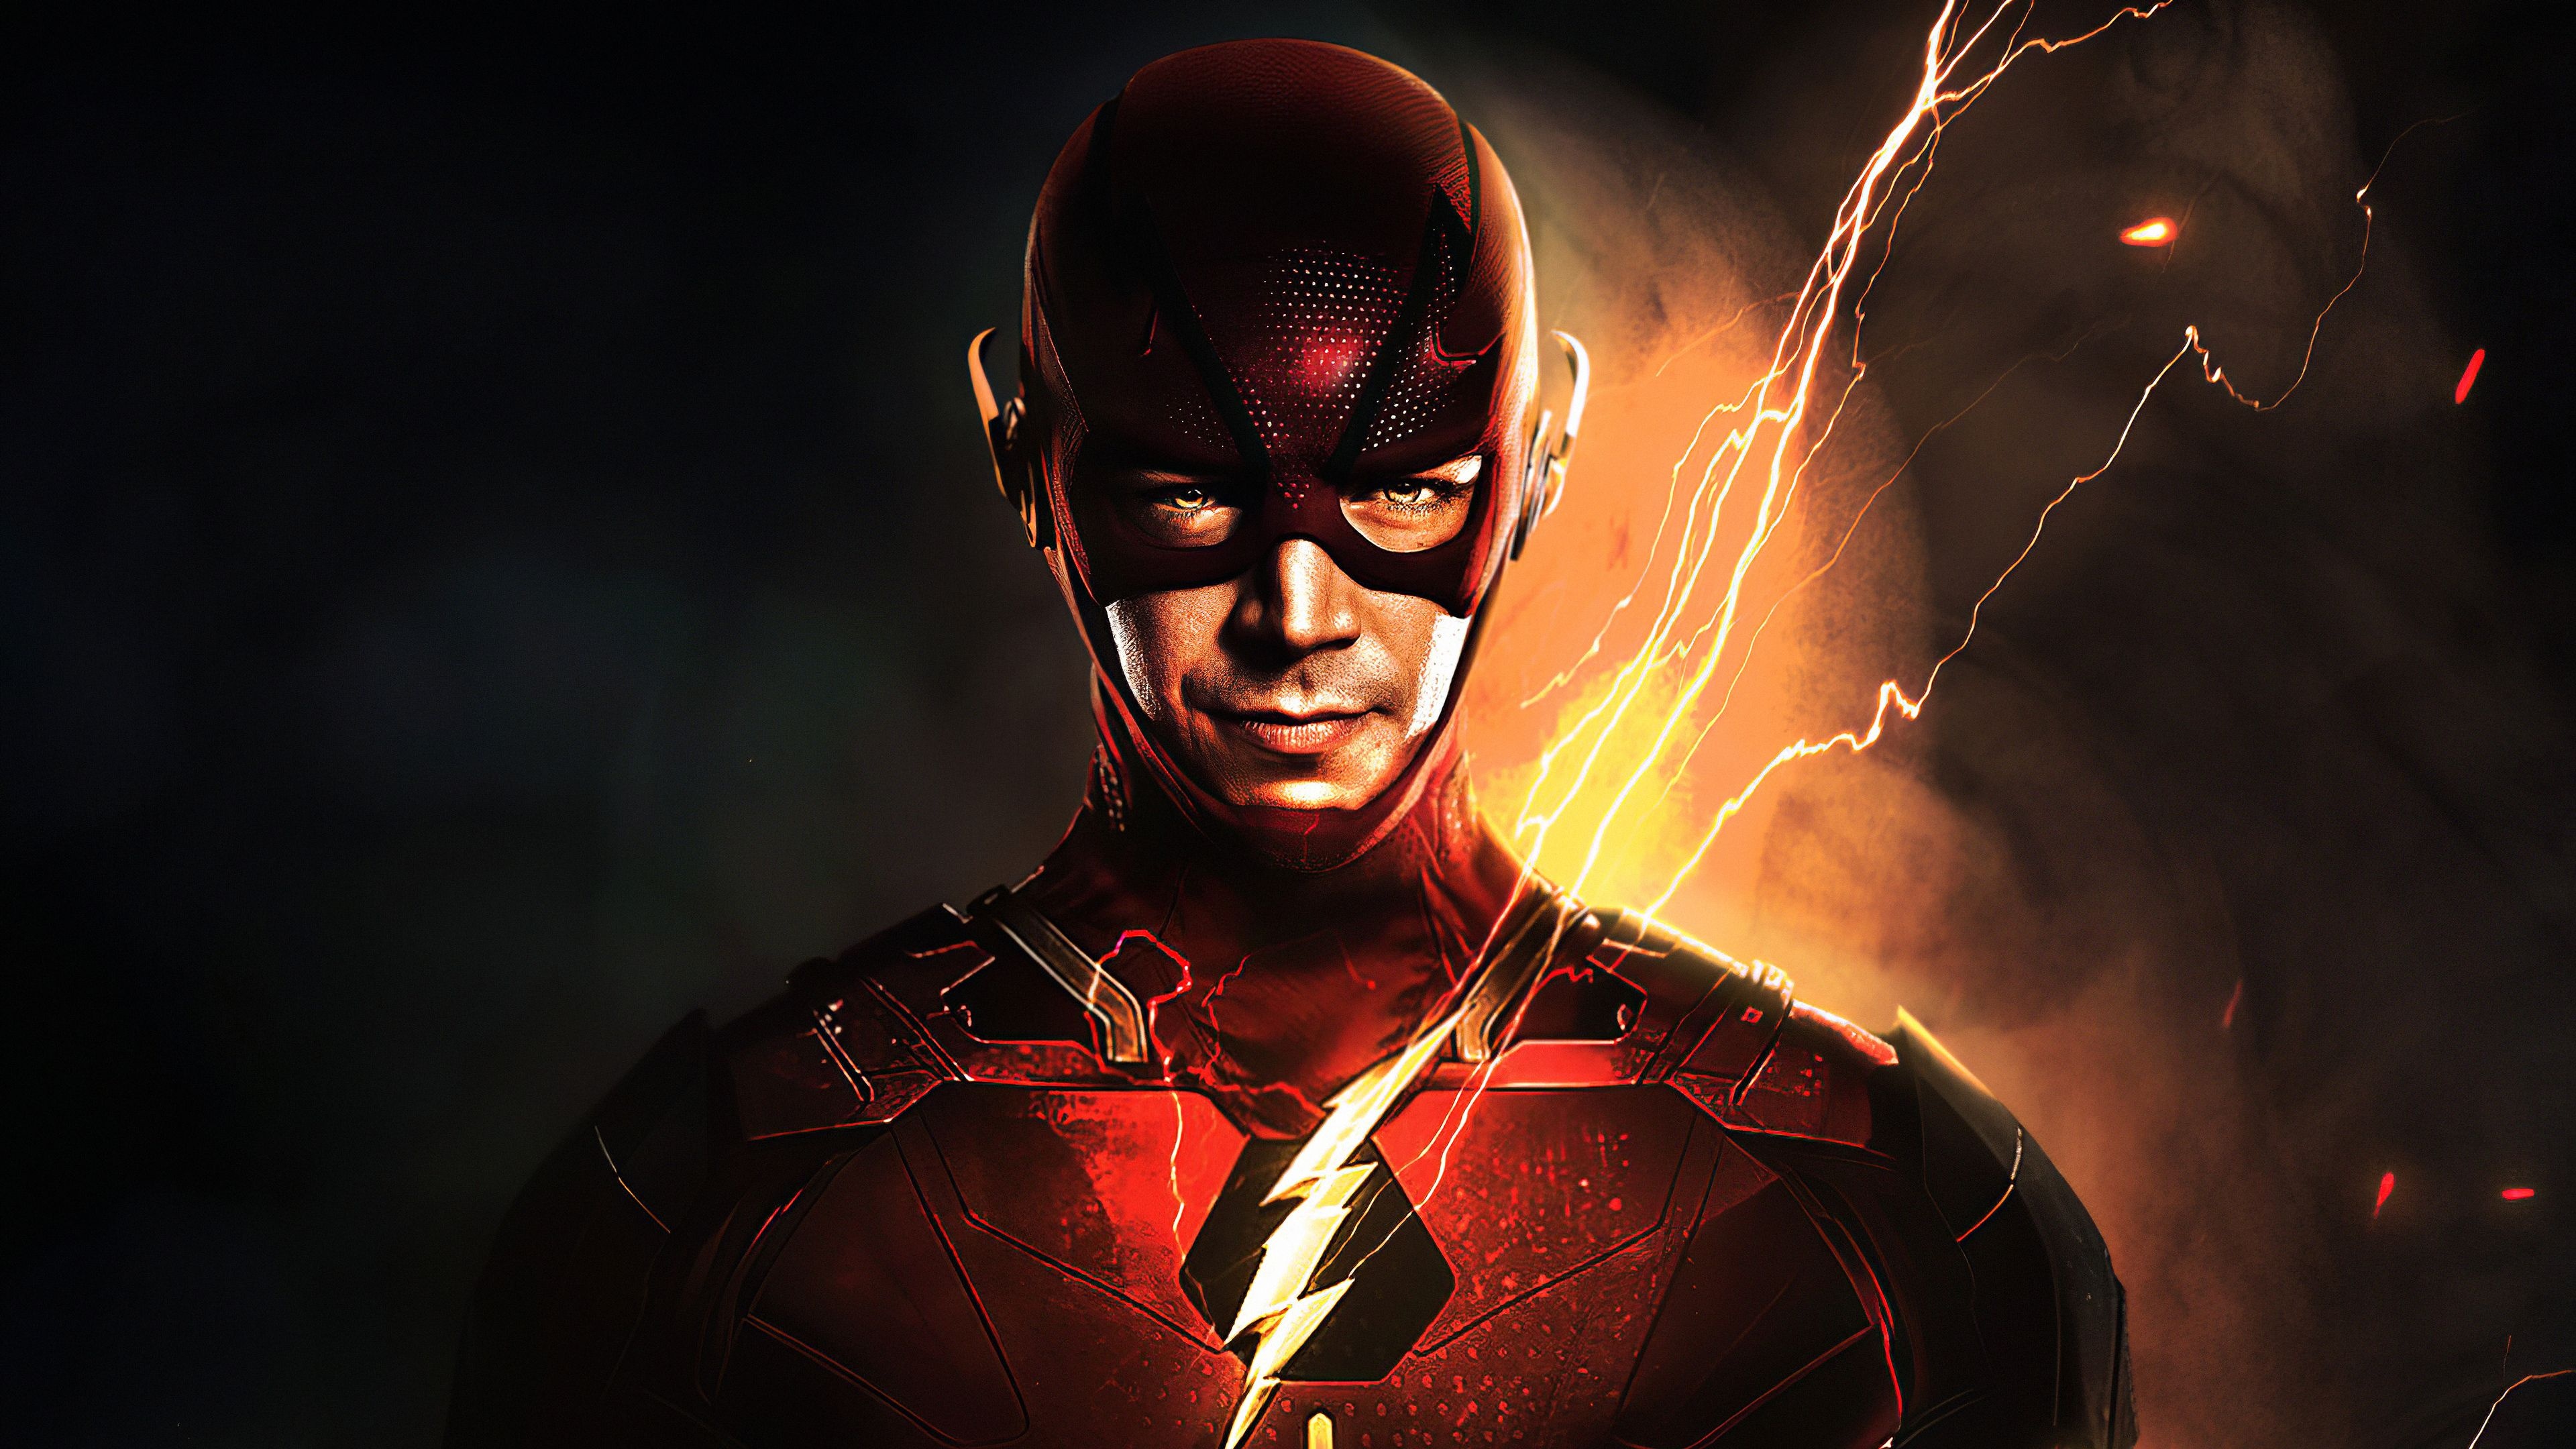 Grant Gustin: Flash, Barry Allen, Superheroes, Digital art, An American superhero television series. 3840x2160 4K Wallpaper.